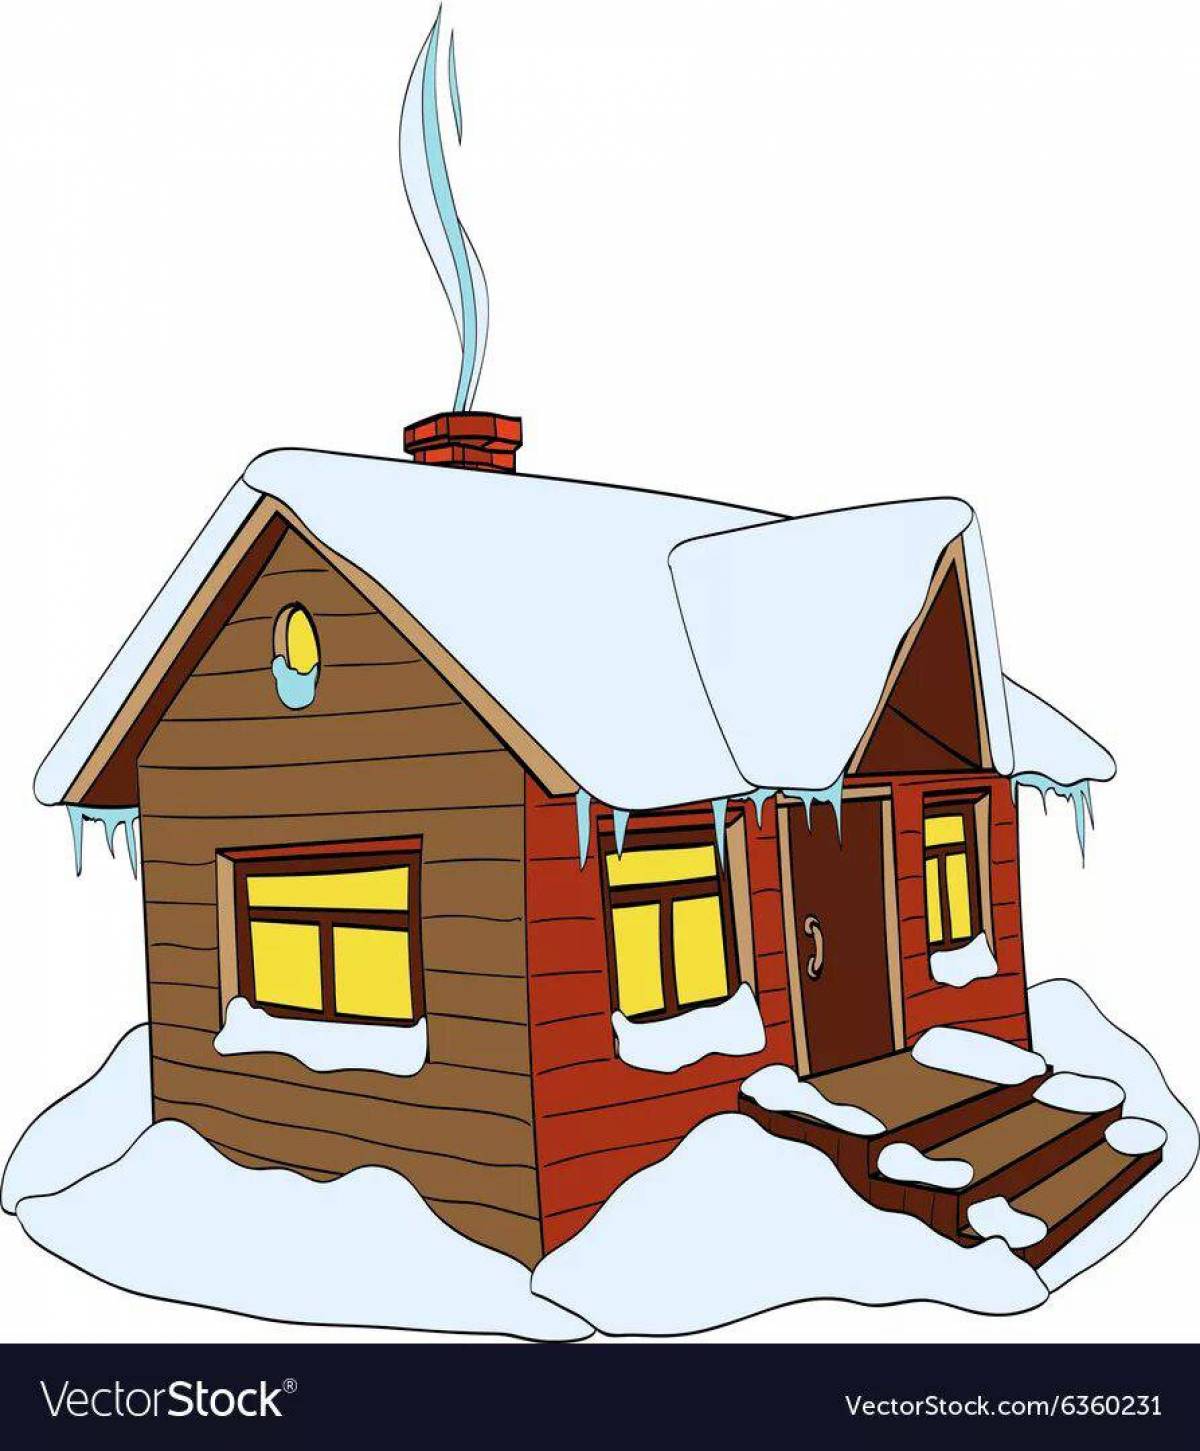 Зимний домик для детей #21